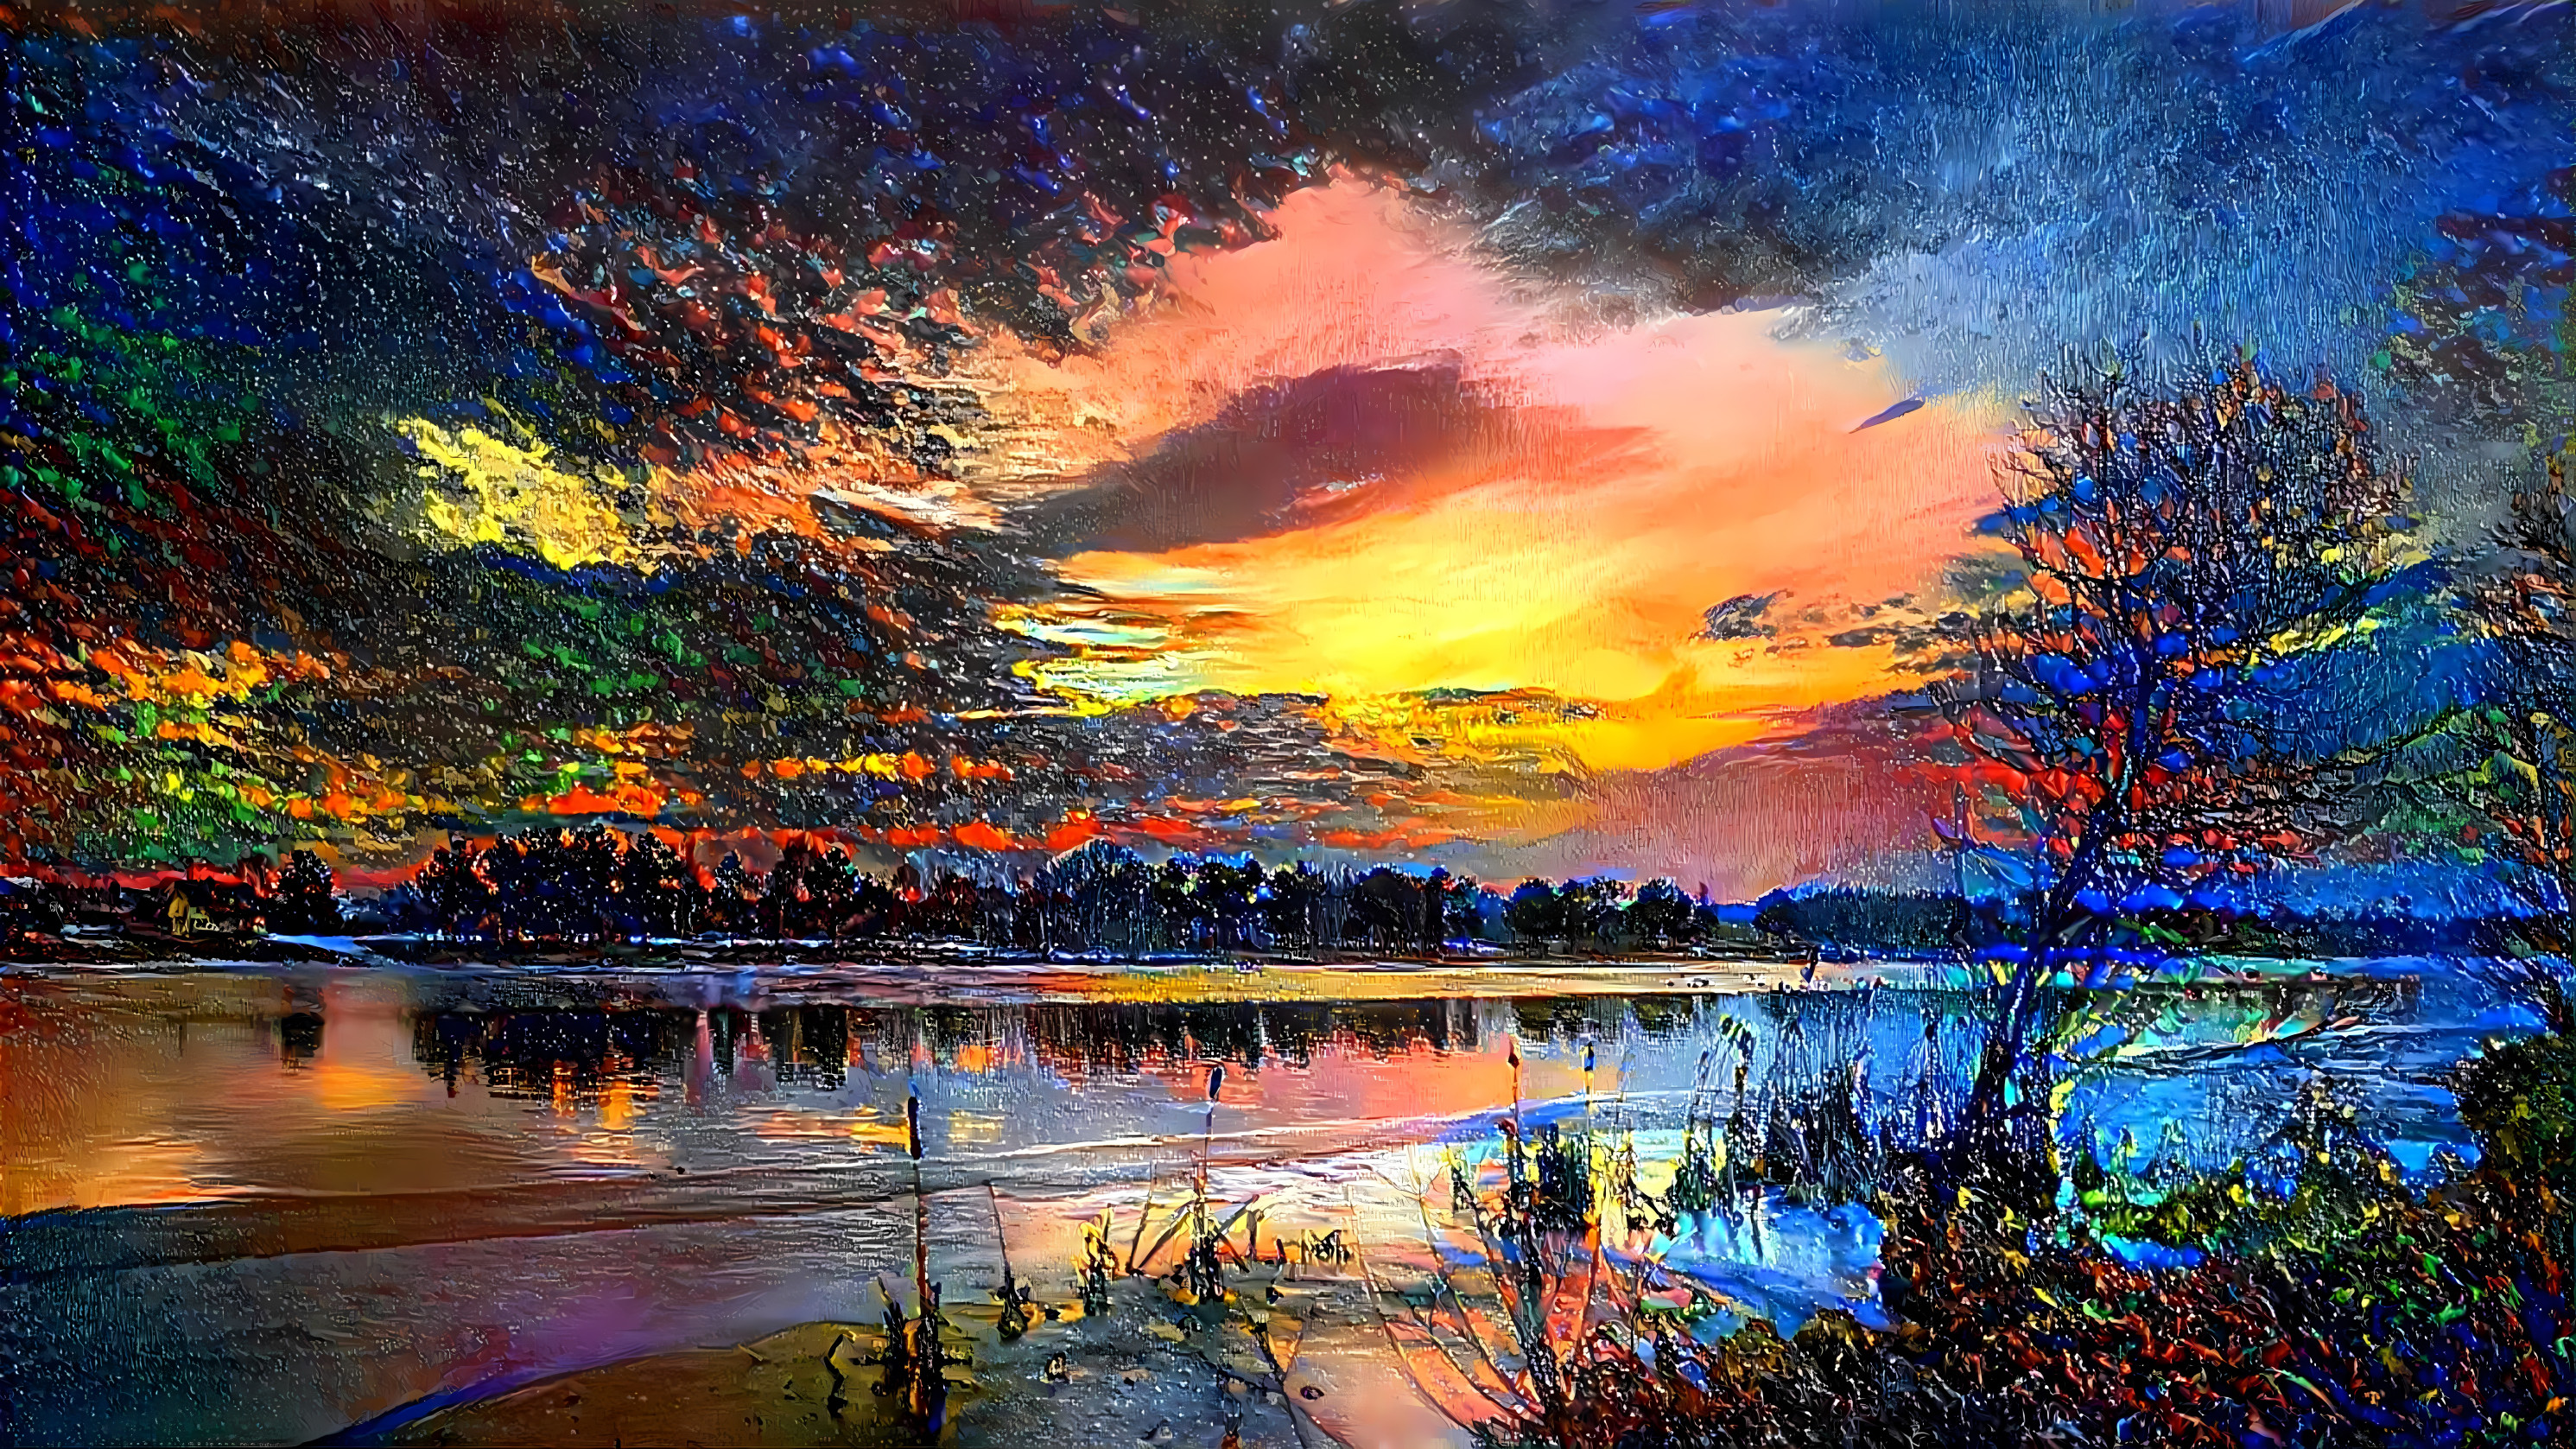 Peaceful lake at evening